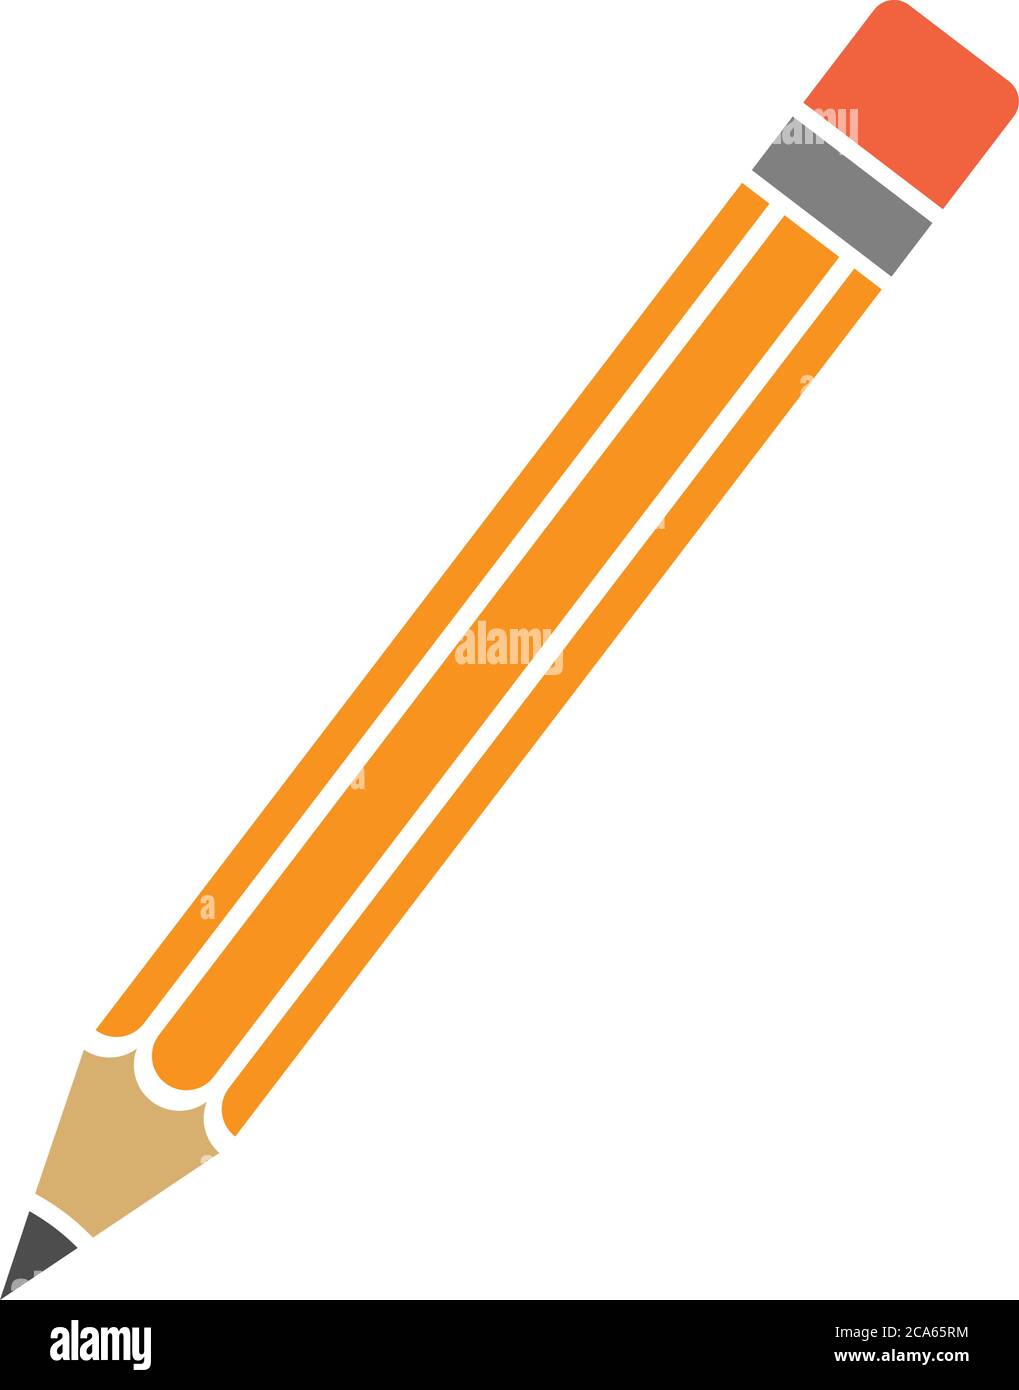 orange lead pencil with eraser icon or symbol vector illustration Stock Vector